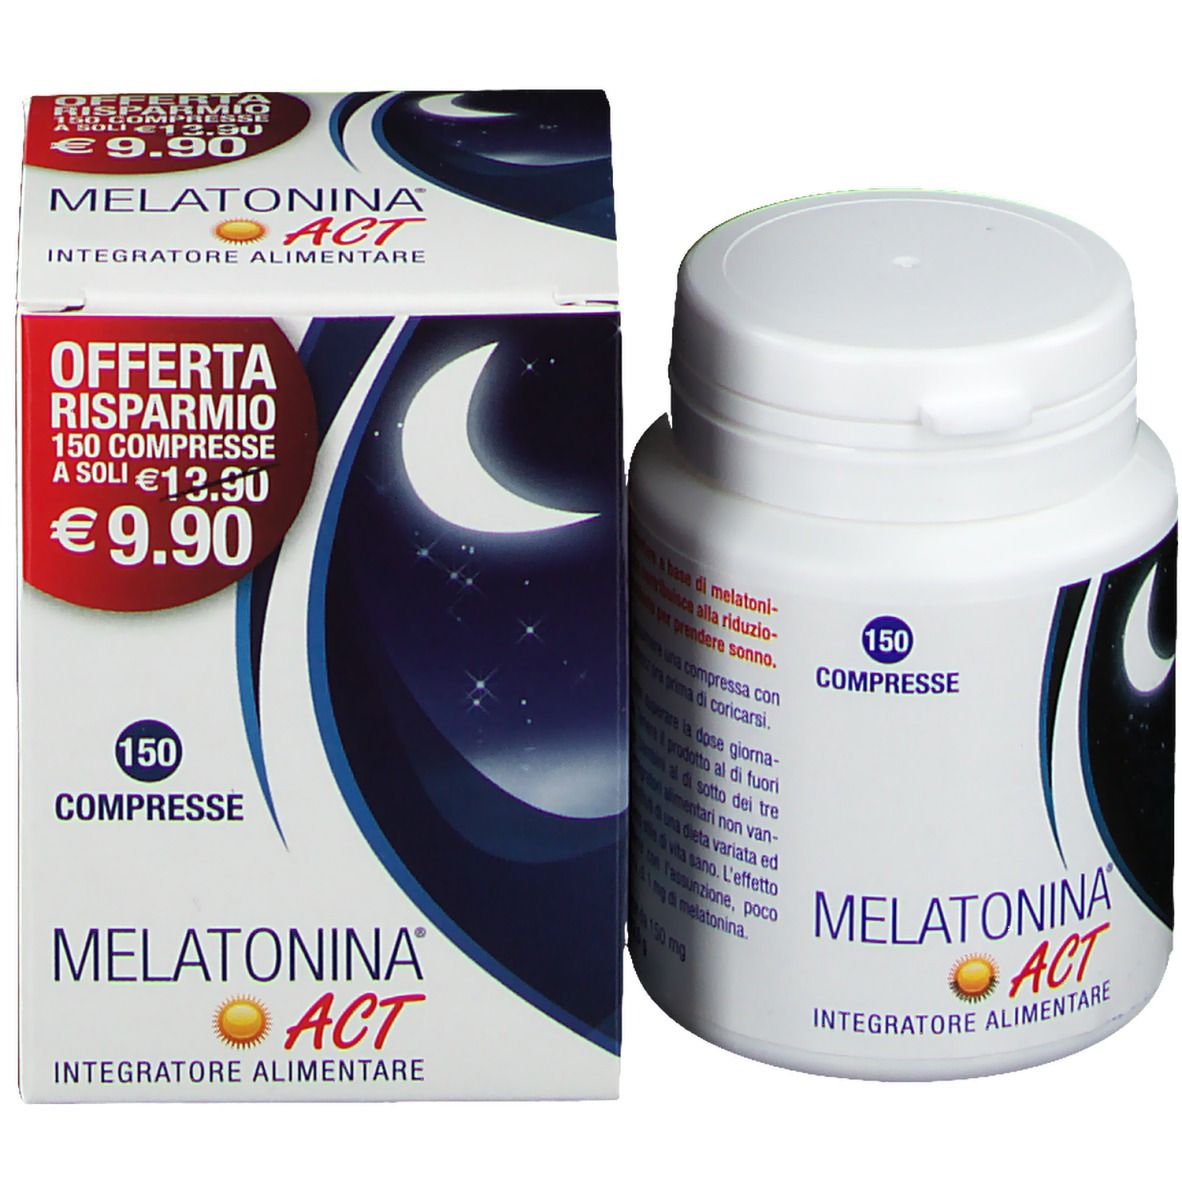 Melatonina® Act